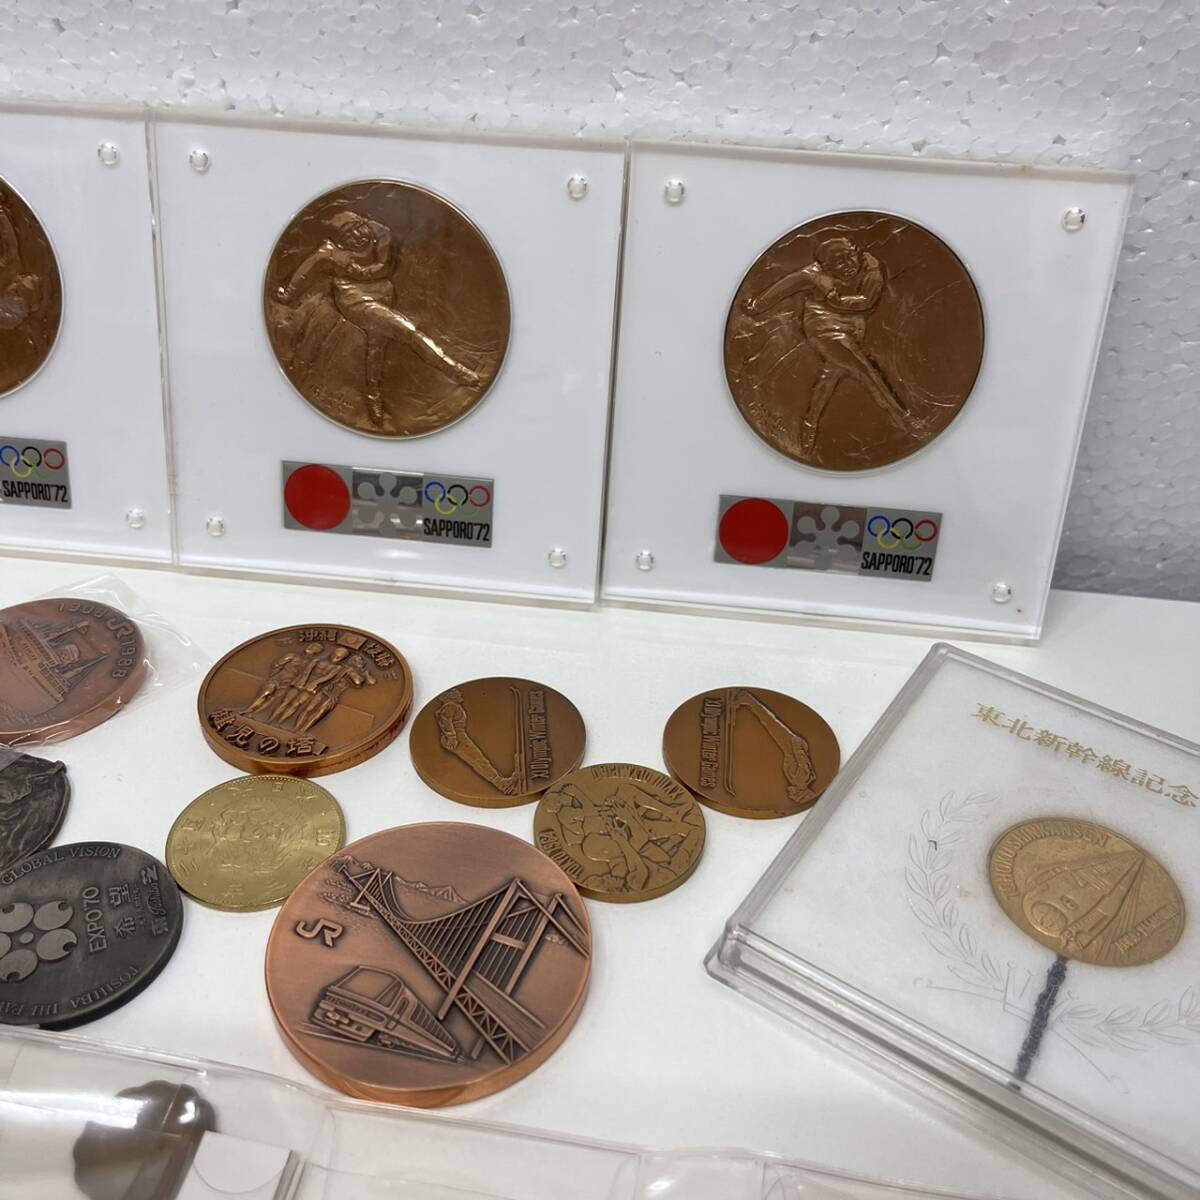 【C-23496a】大量 記念メダル コイン まとめ売り オリンピック JR 日本 Japan 世界 海外コイン コレクション コレクター 整理品 保管品_画像3